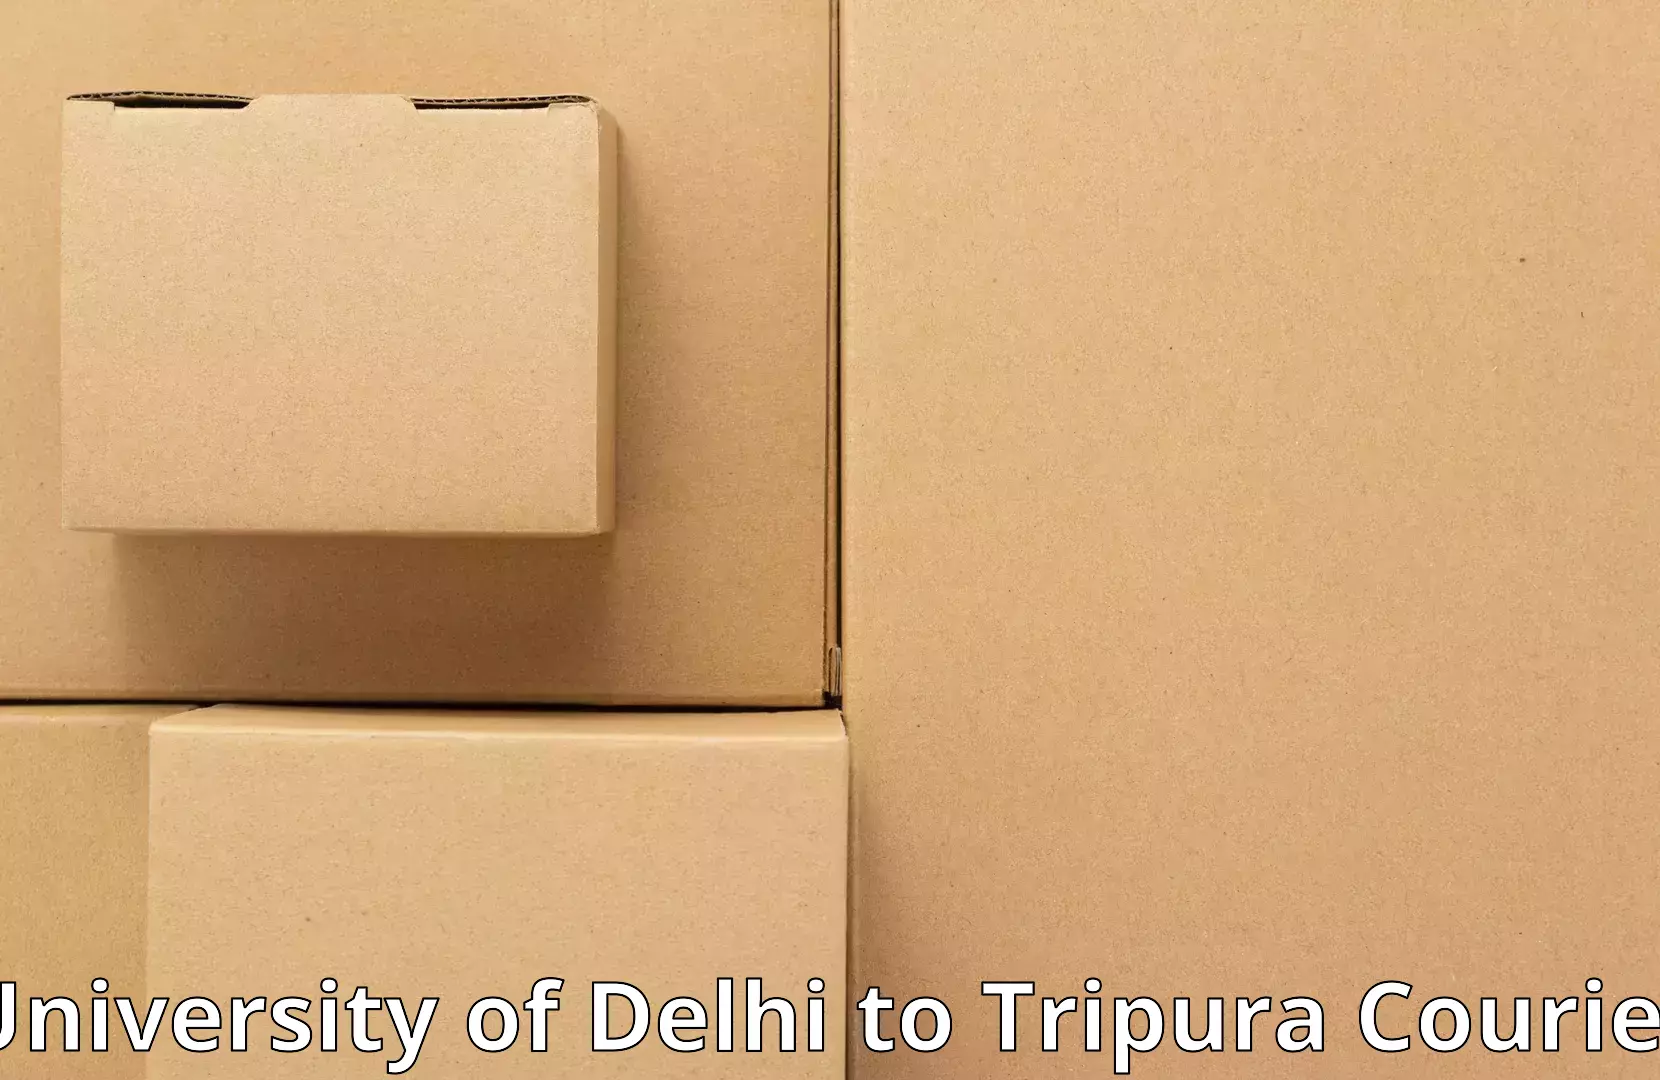 Custom moving plans in University of Delhi to Udaipur Tripura